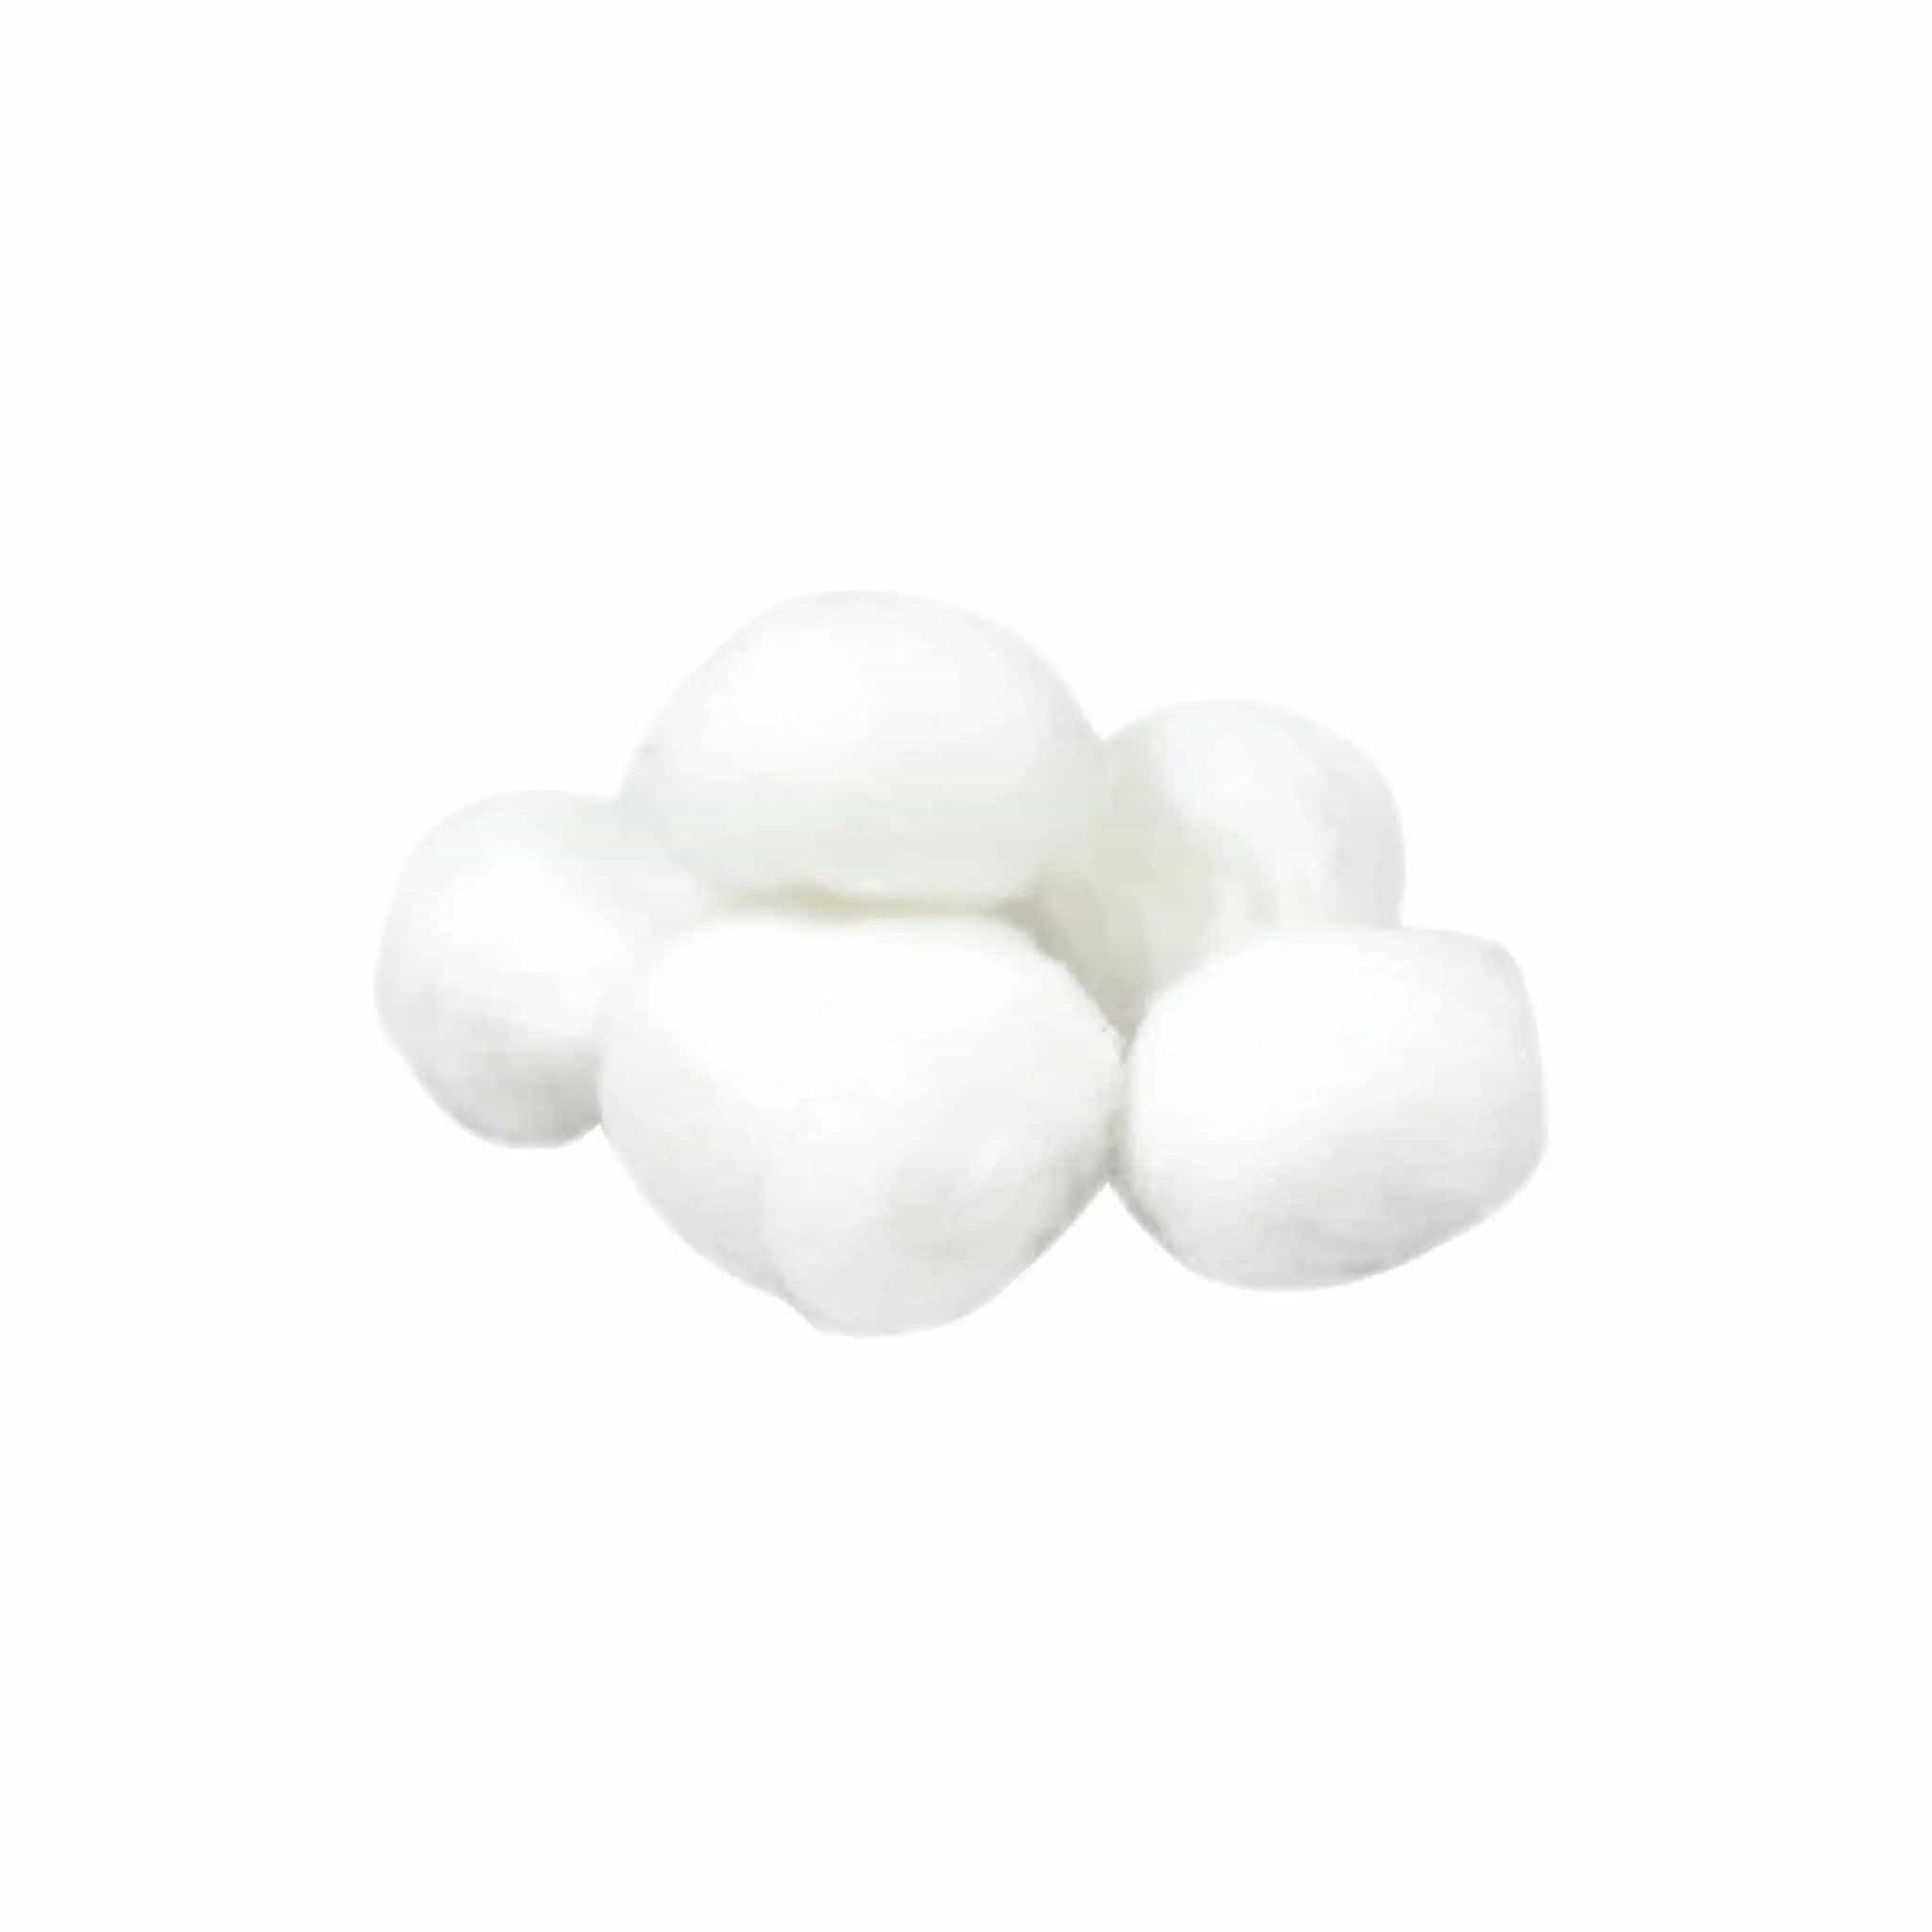 Cotton Wool Balls 500pcs (Small) Non-Sterile Herbprime Co., Ltd